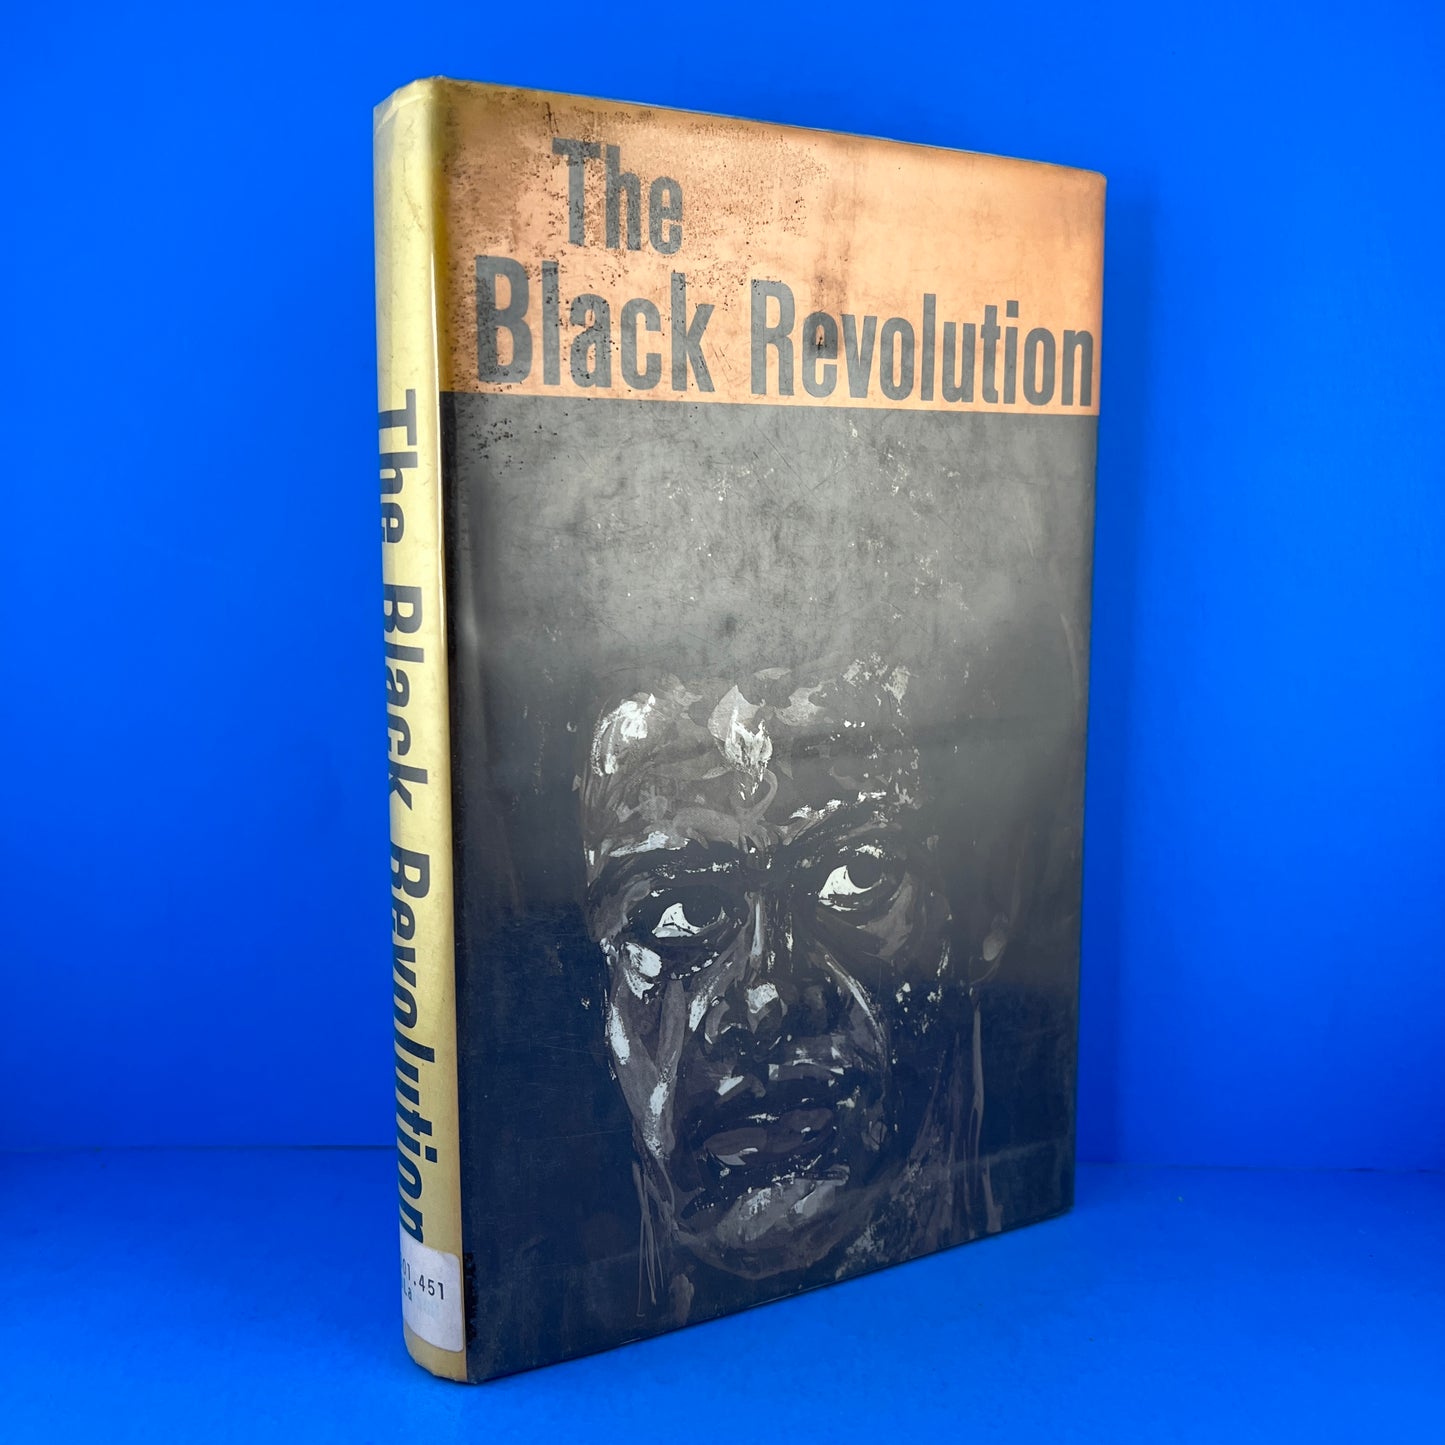 The Black Revolution